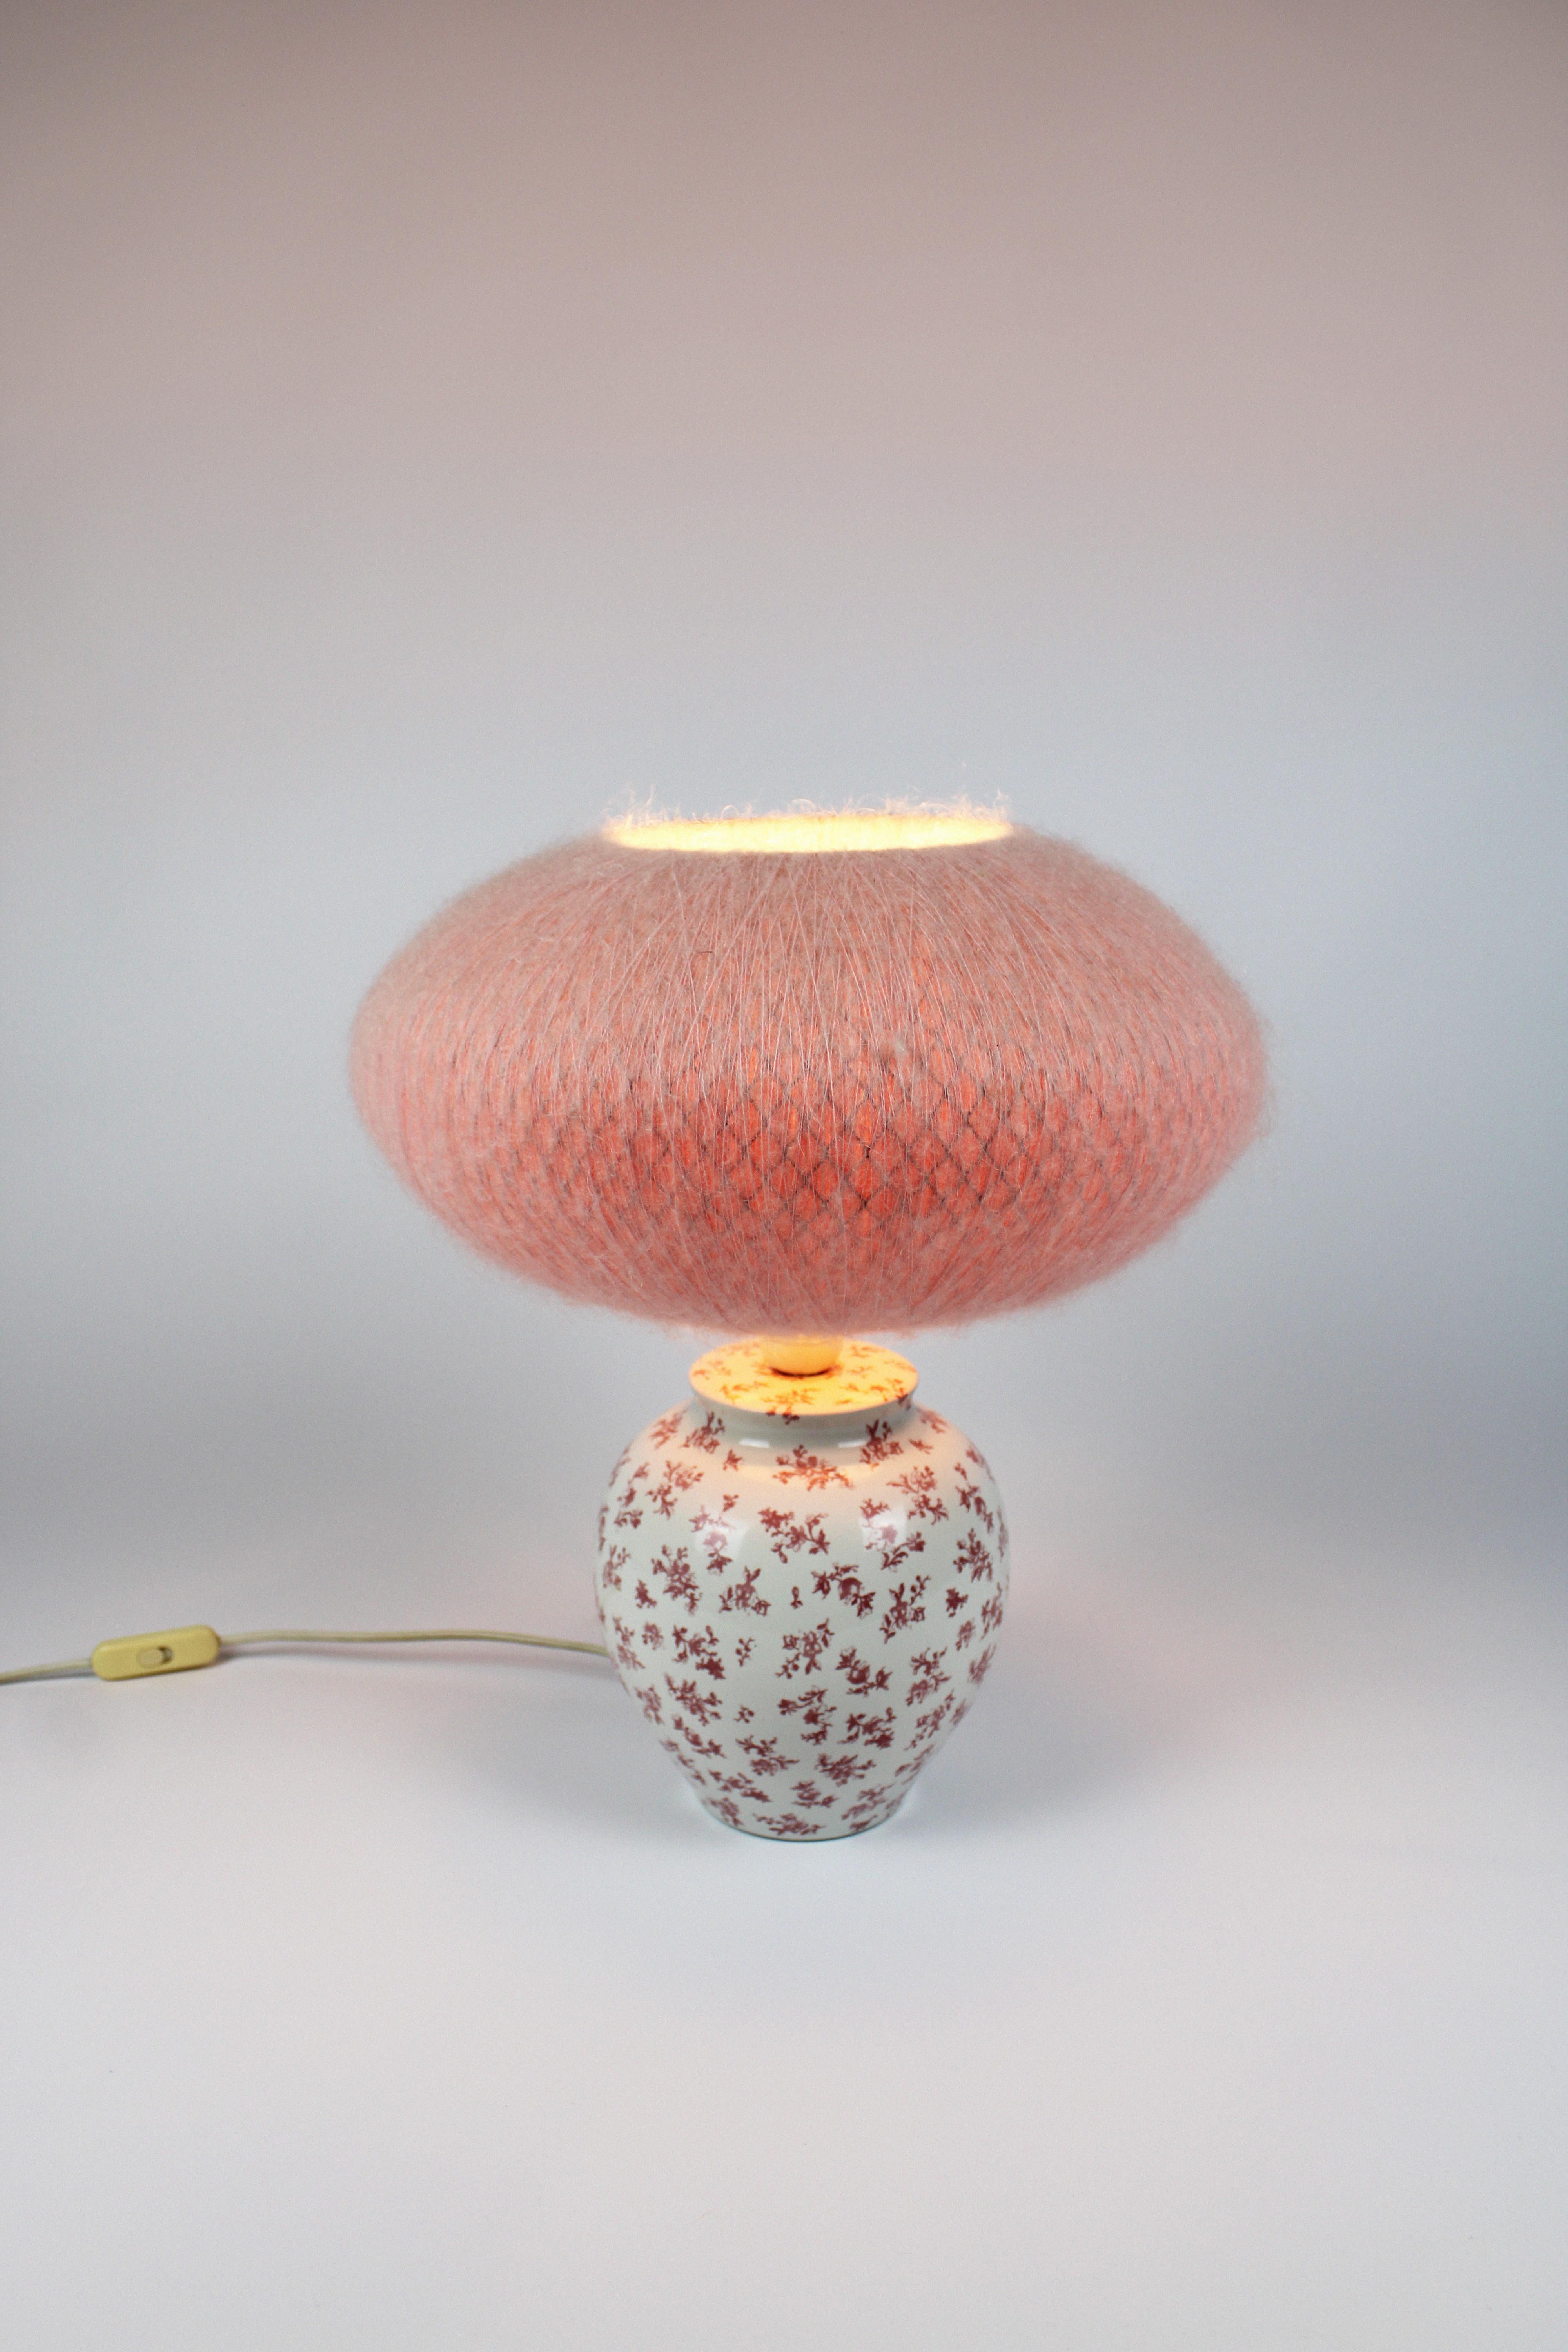 Biedermeier Laura Ashley Table Lamp Porcelain Wool Salmon Pink 1970's UK For Sale